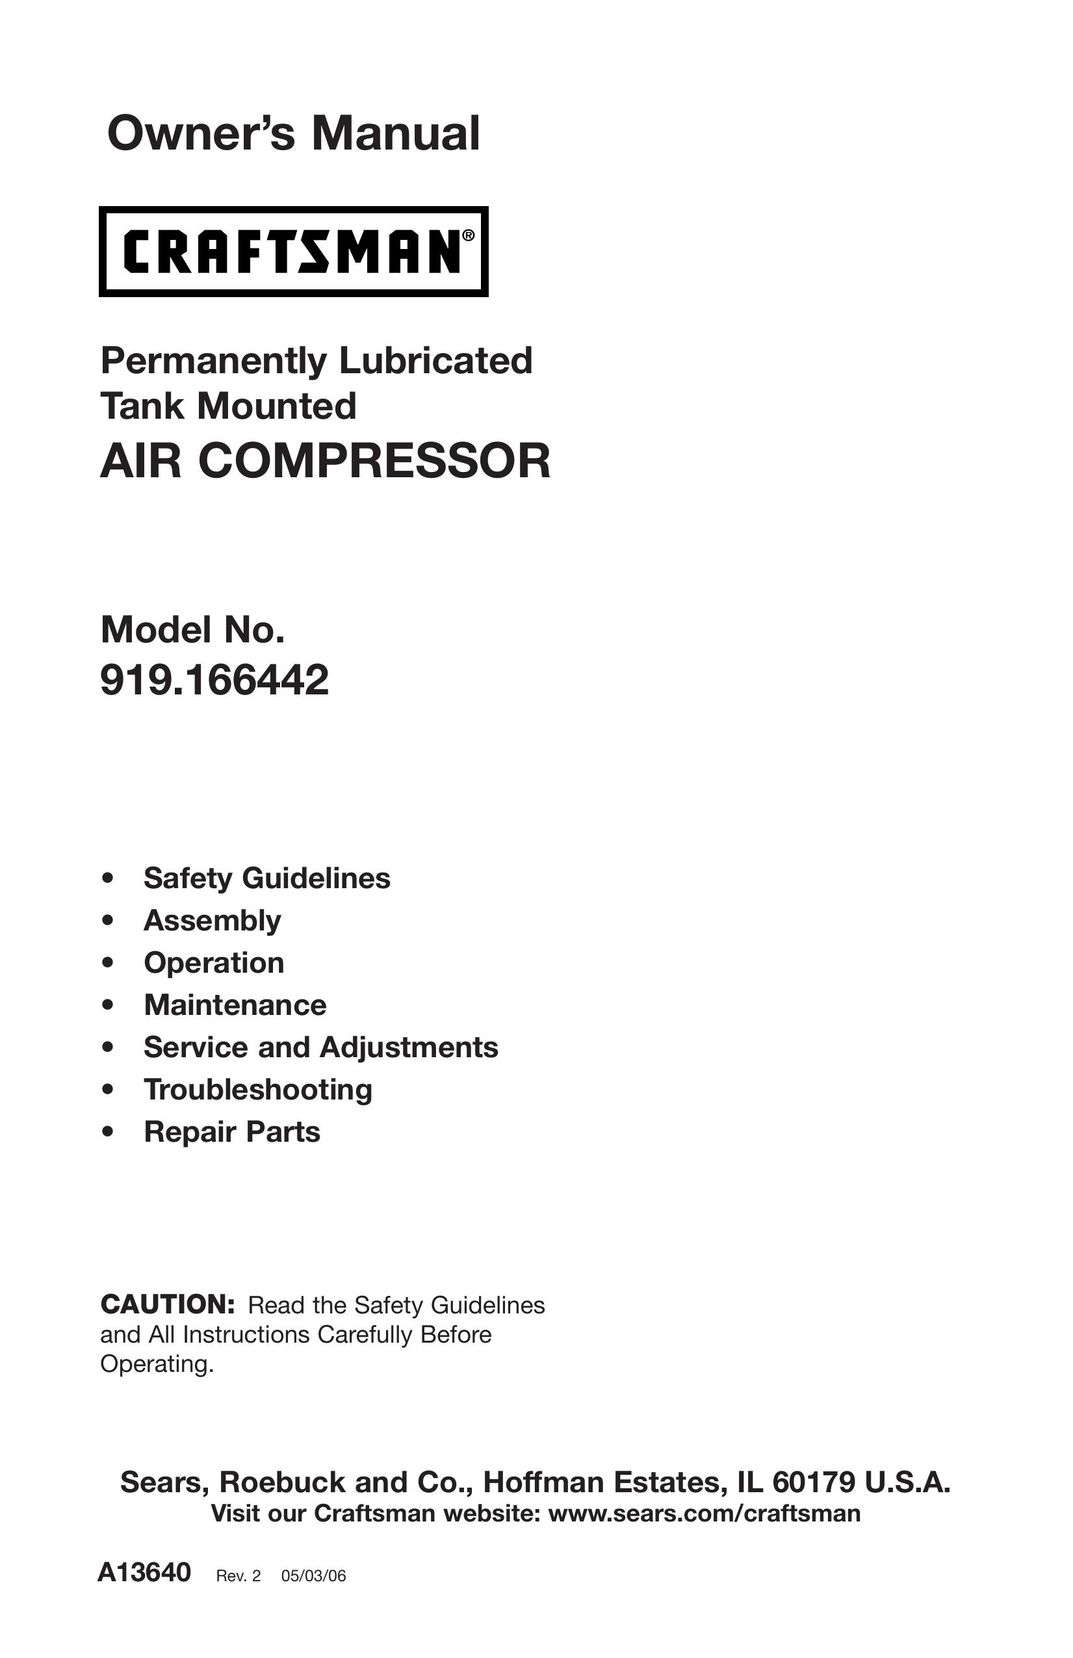 Craftsman 919.166442 Air Compressor User Manual